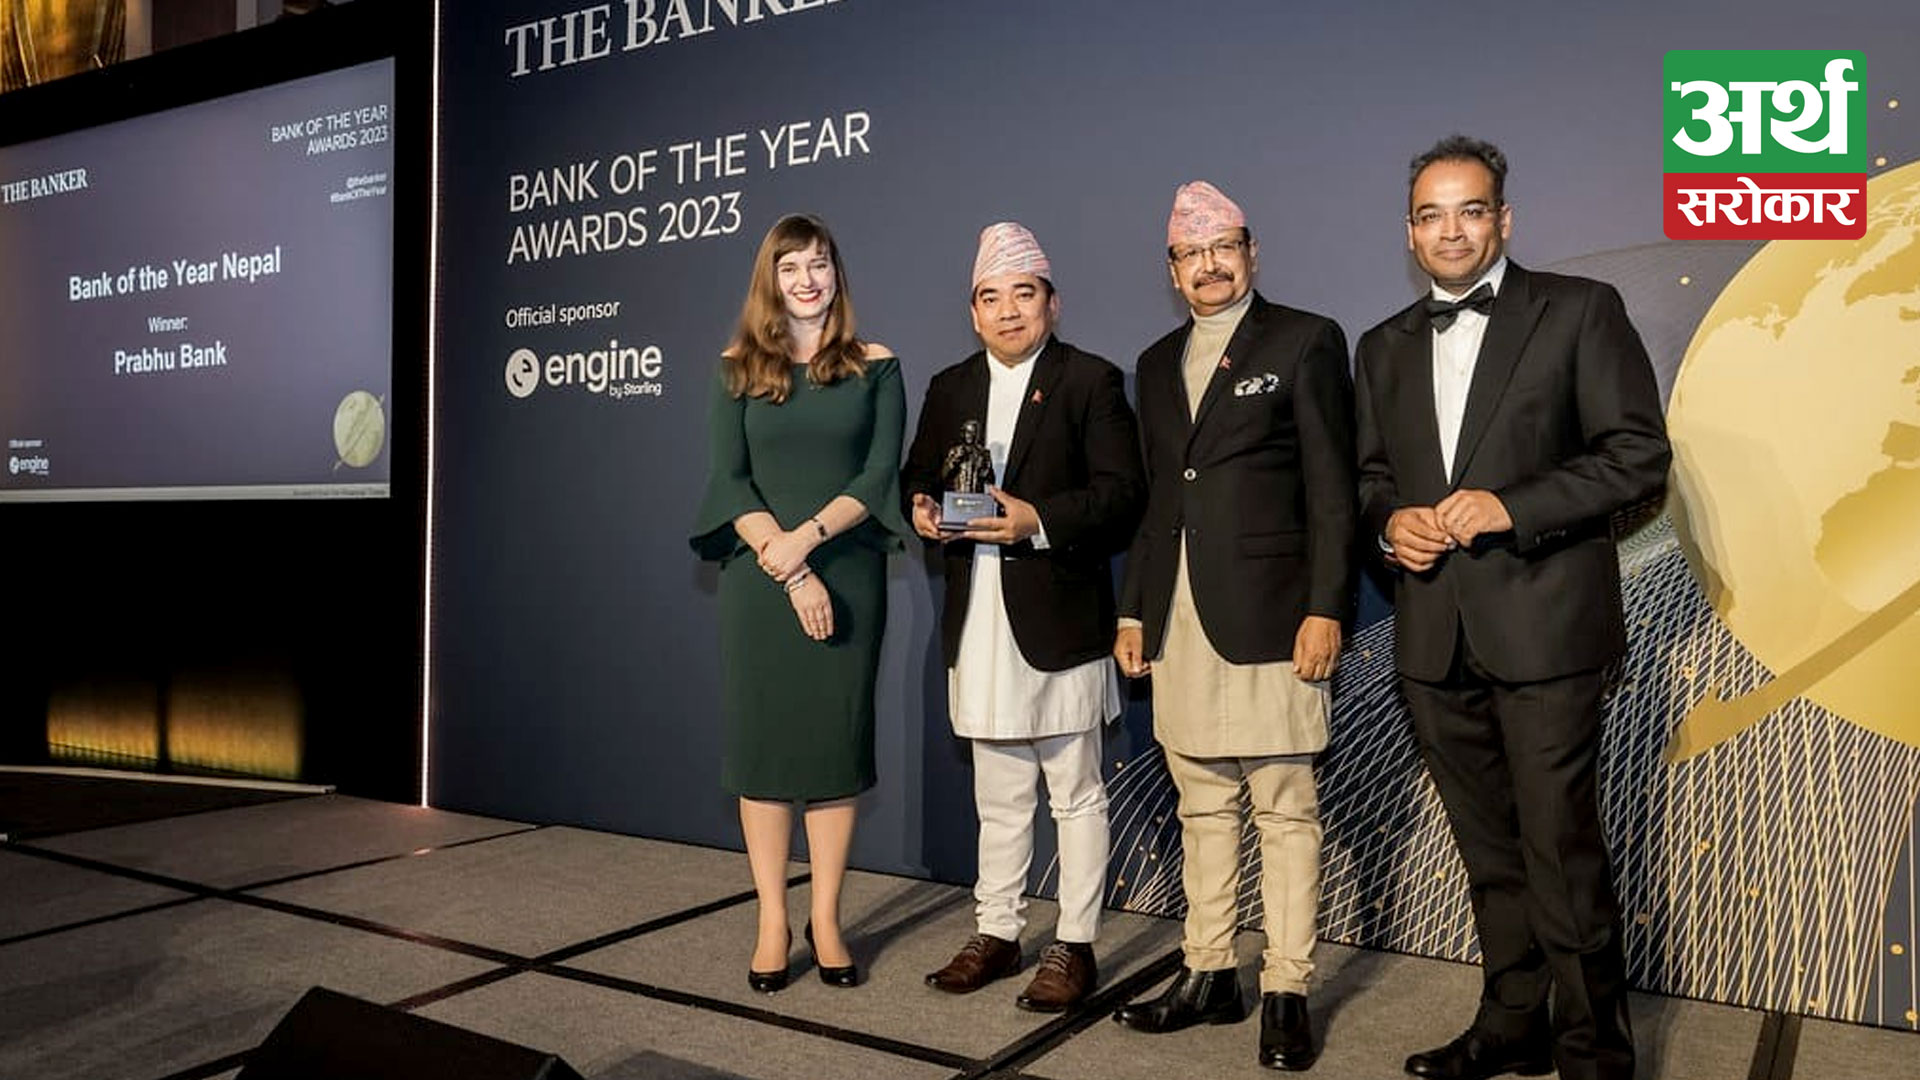 Prabhu Bank receives the prestigious ‘Bank of the Year’ award